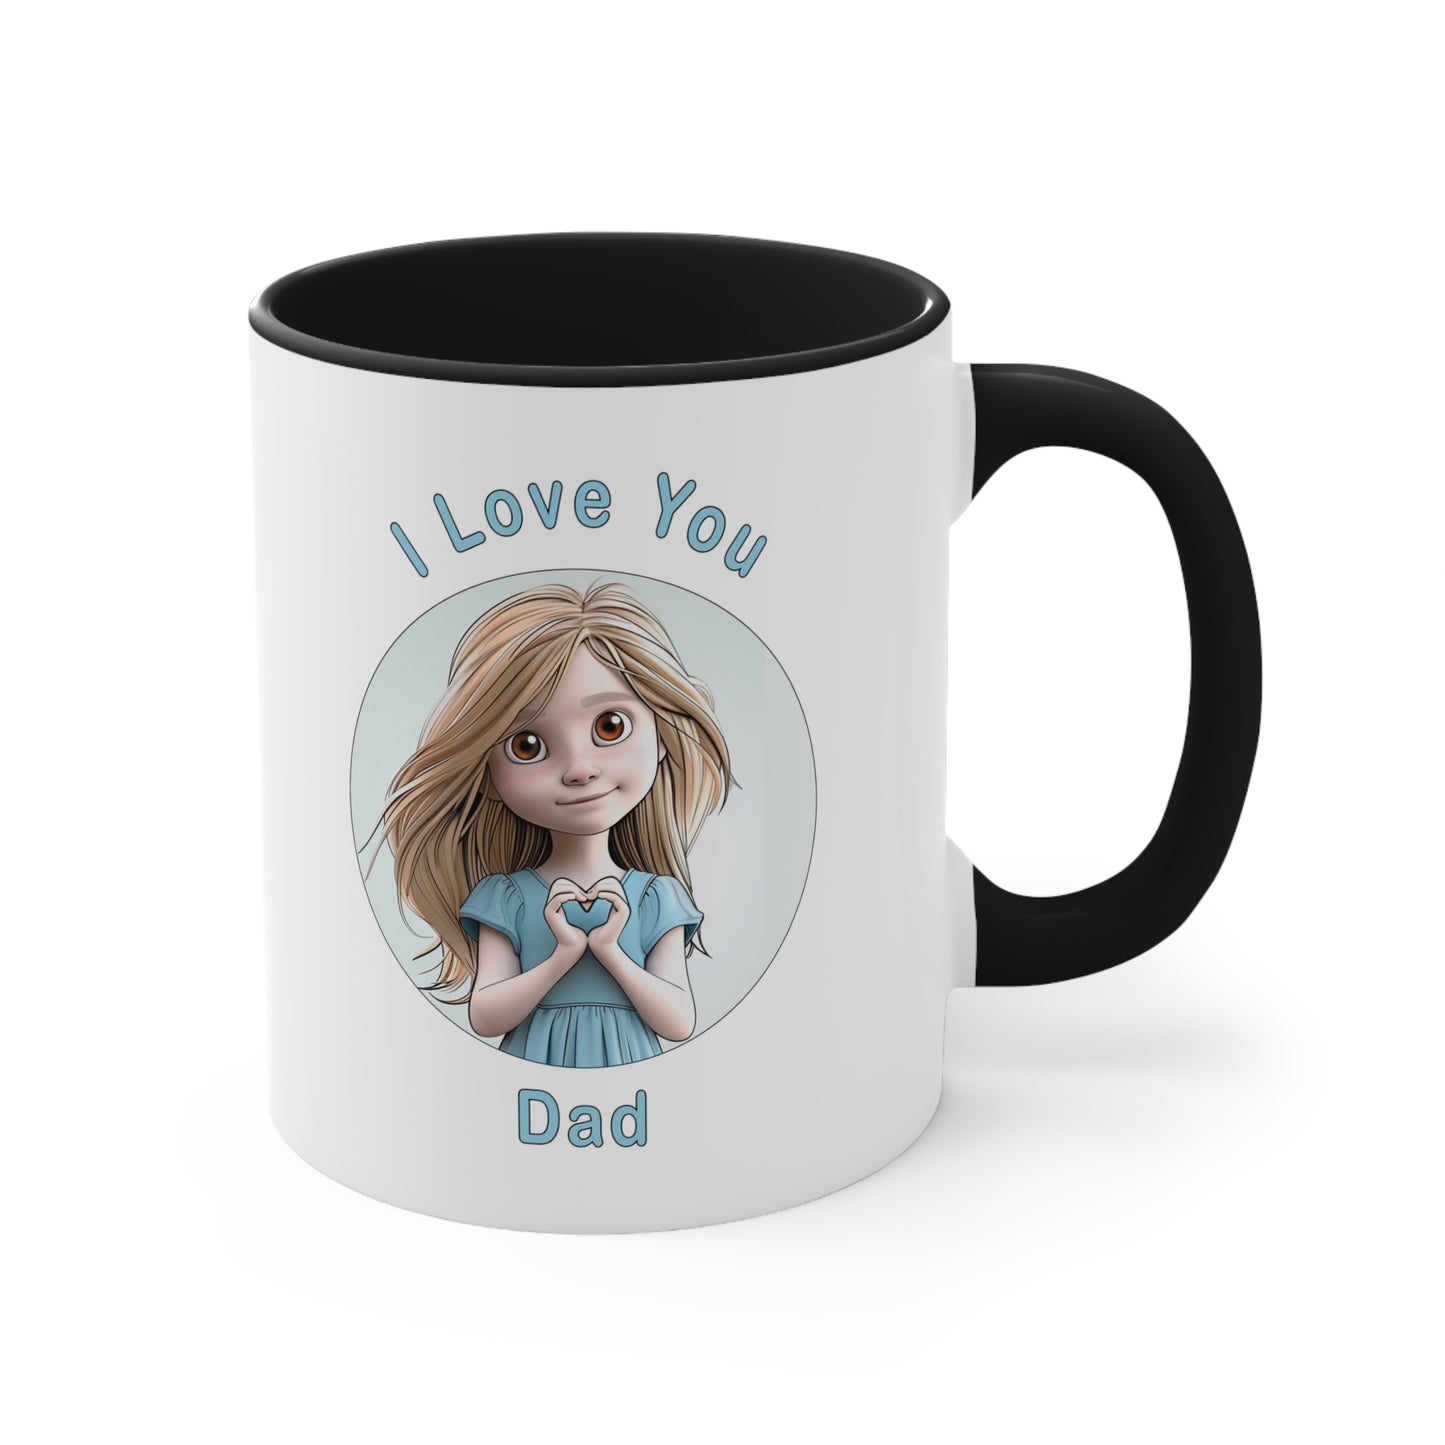 I love You Dad Coffee Mug, 11oz